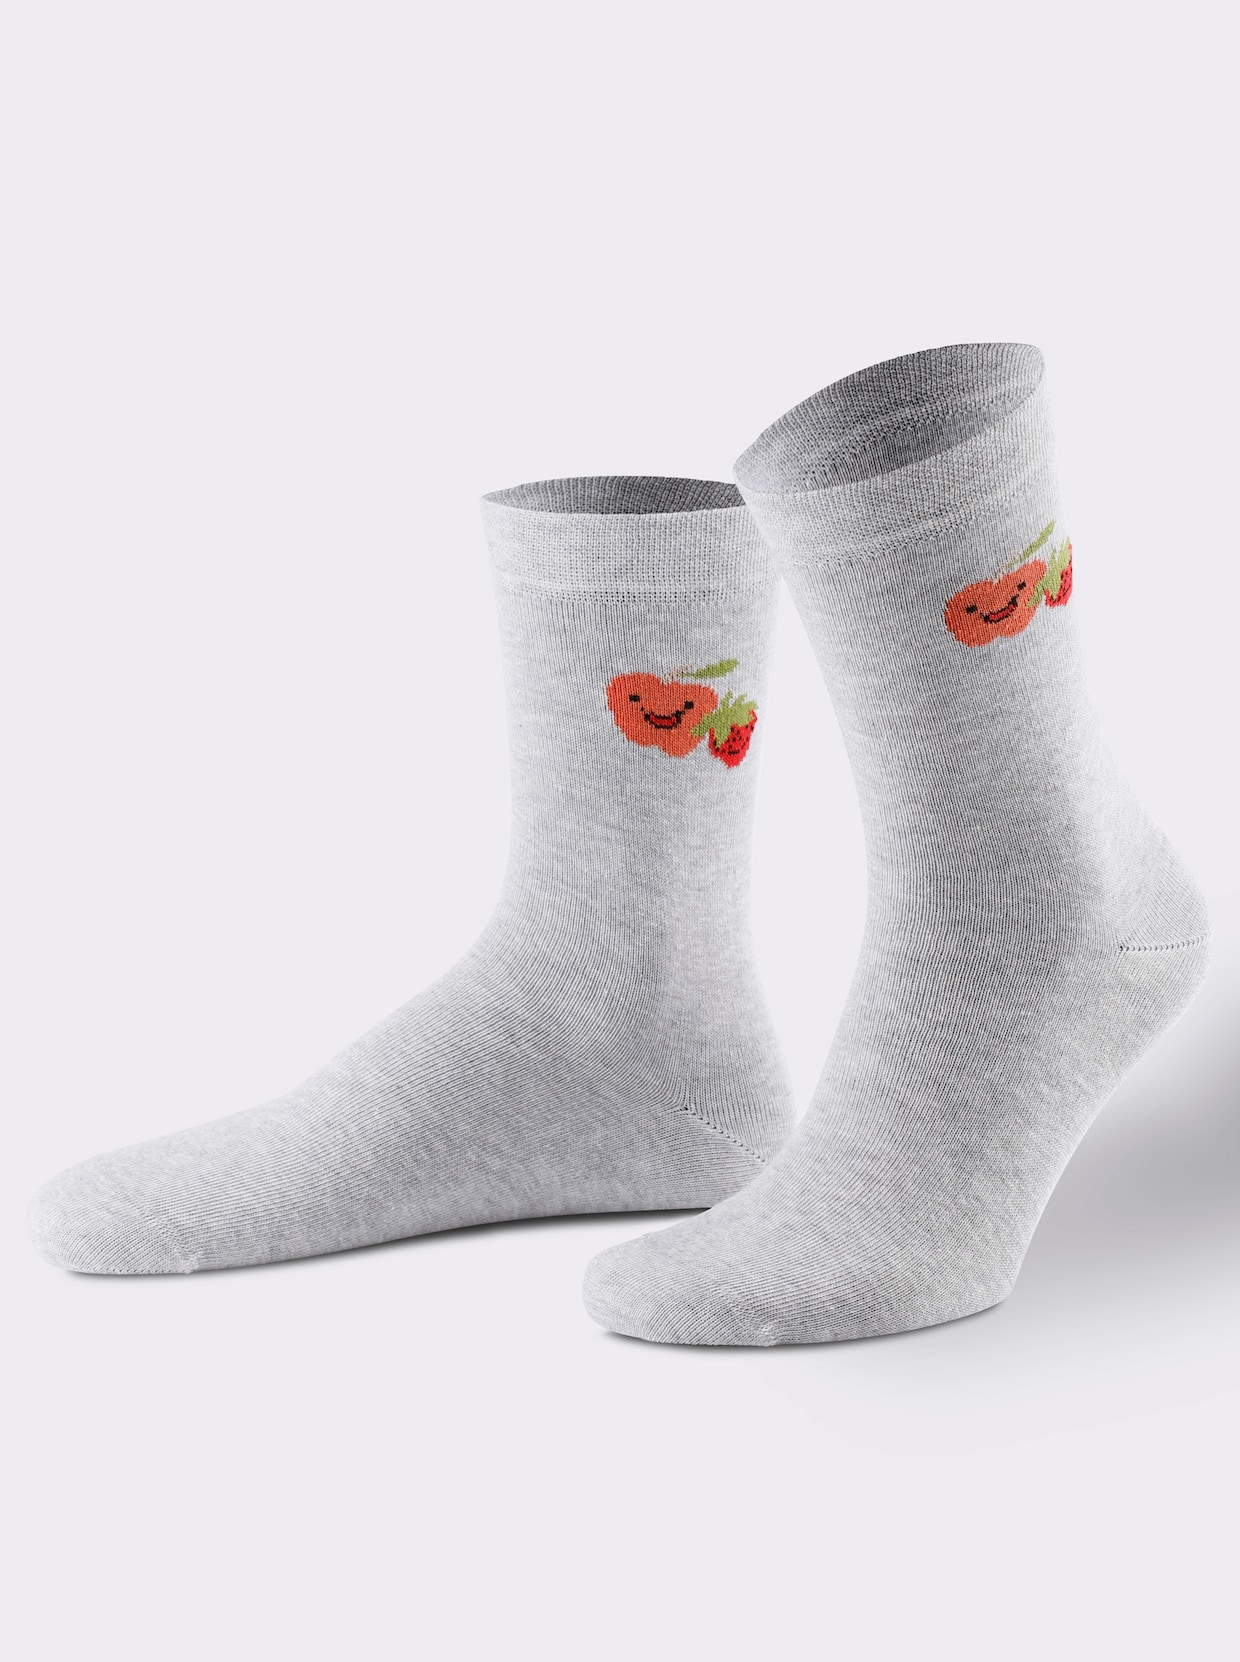 wäschepur Damen-Socken - hellgrau-meliert-weiss